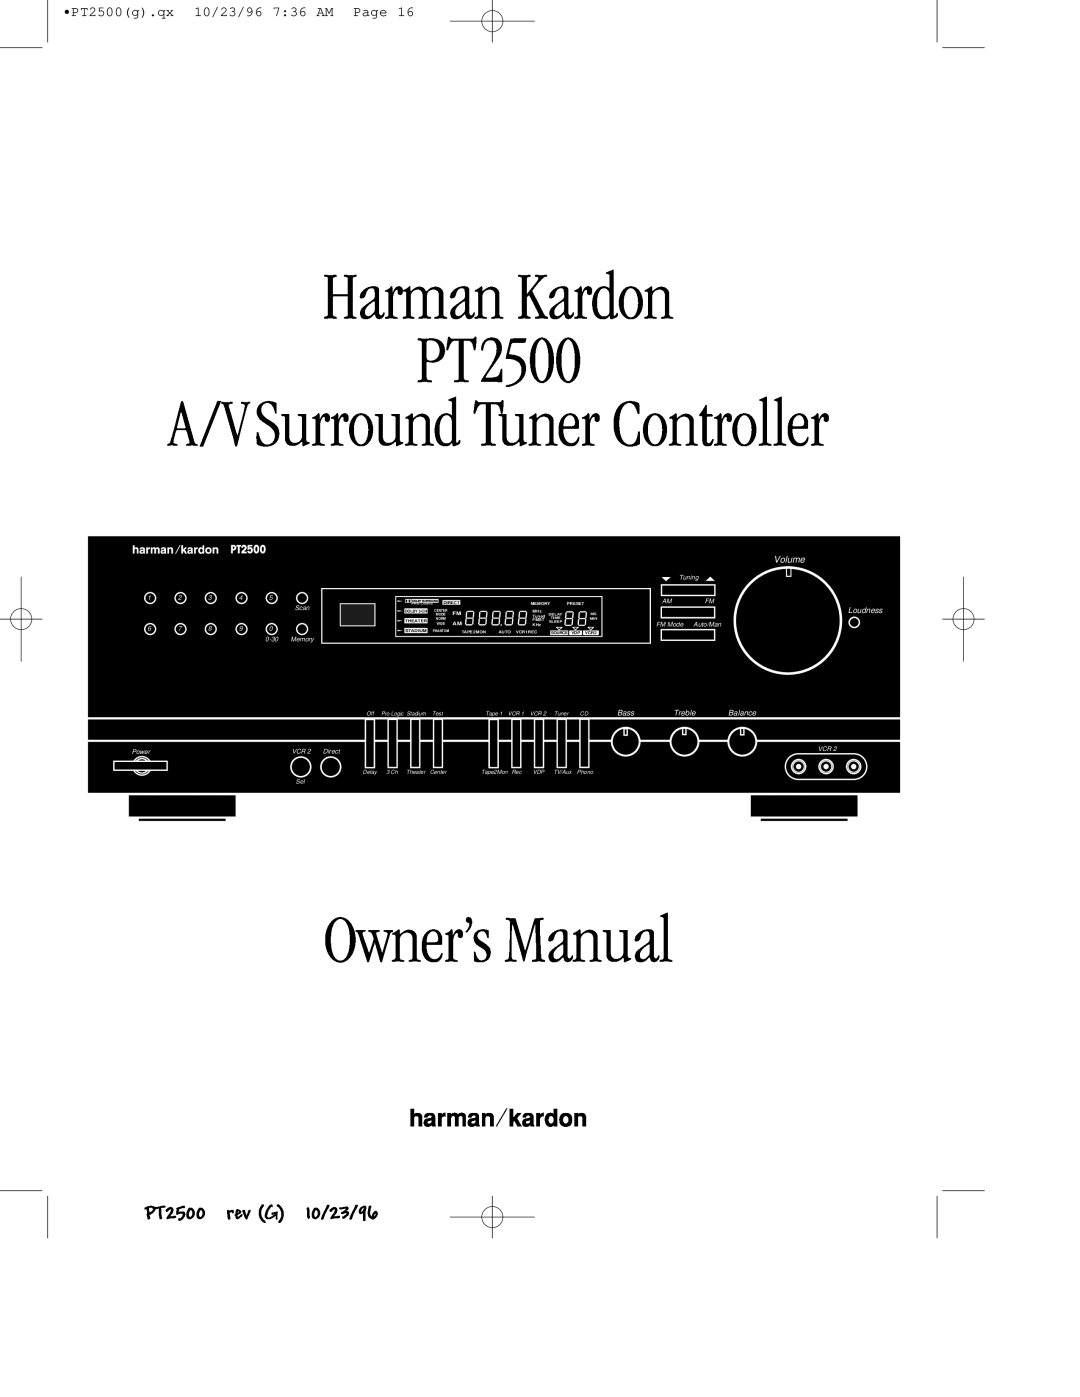 Harman-Kardon owner manual PT2500 rev G 10/23/96, Harman Kardon PT2500 A/VSurround Tuner Controller, Volume, Loudness 